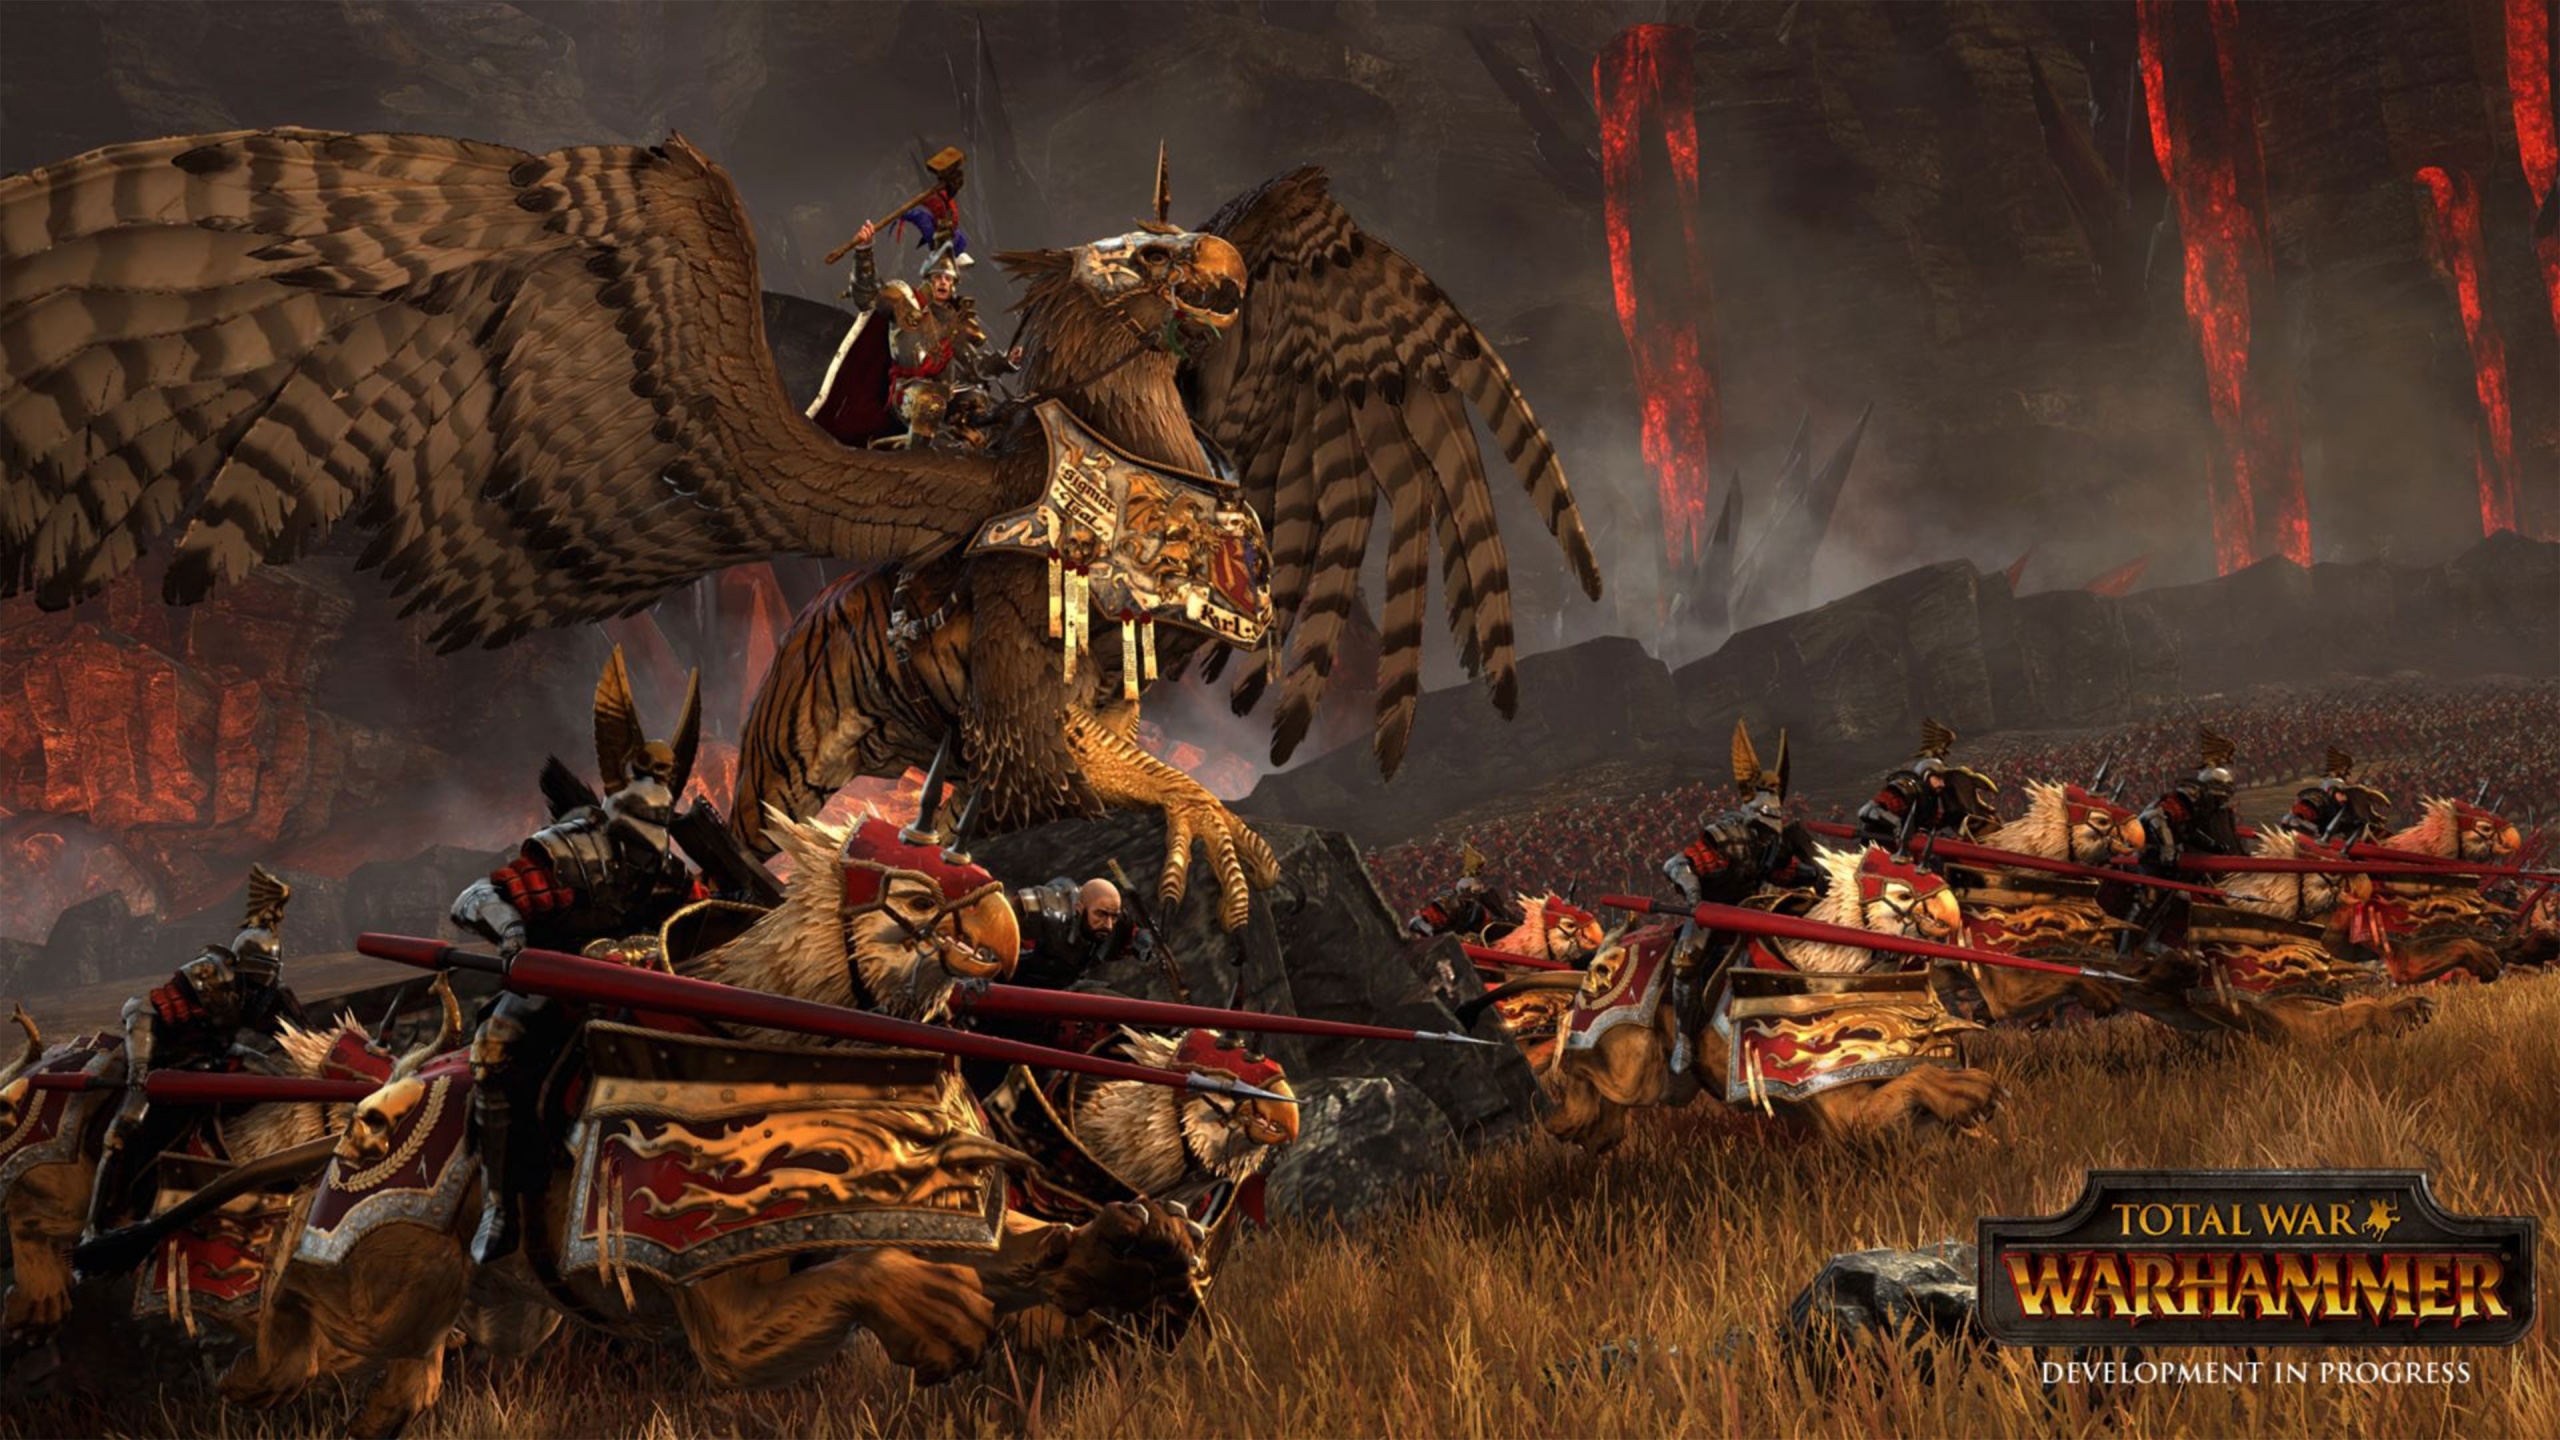 Total War Warhammer 2016 Video Game HD Wallpaper   iHD Wallpapers